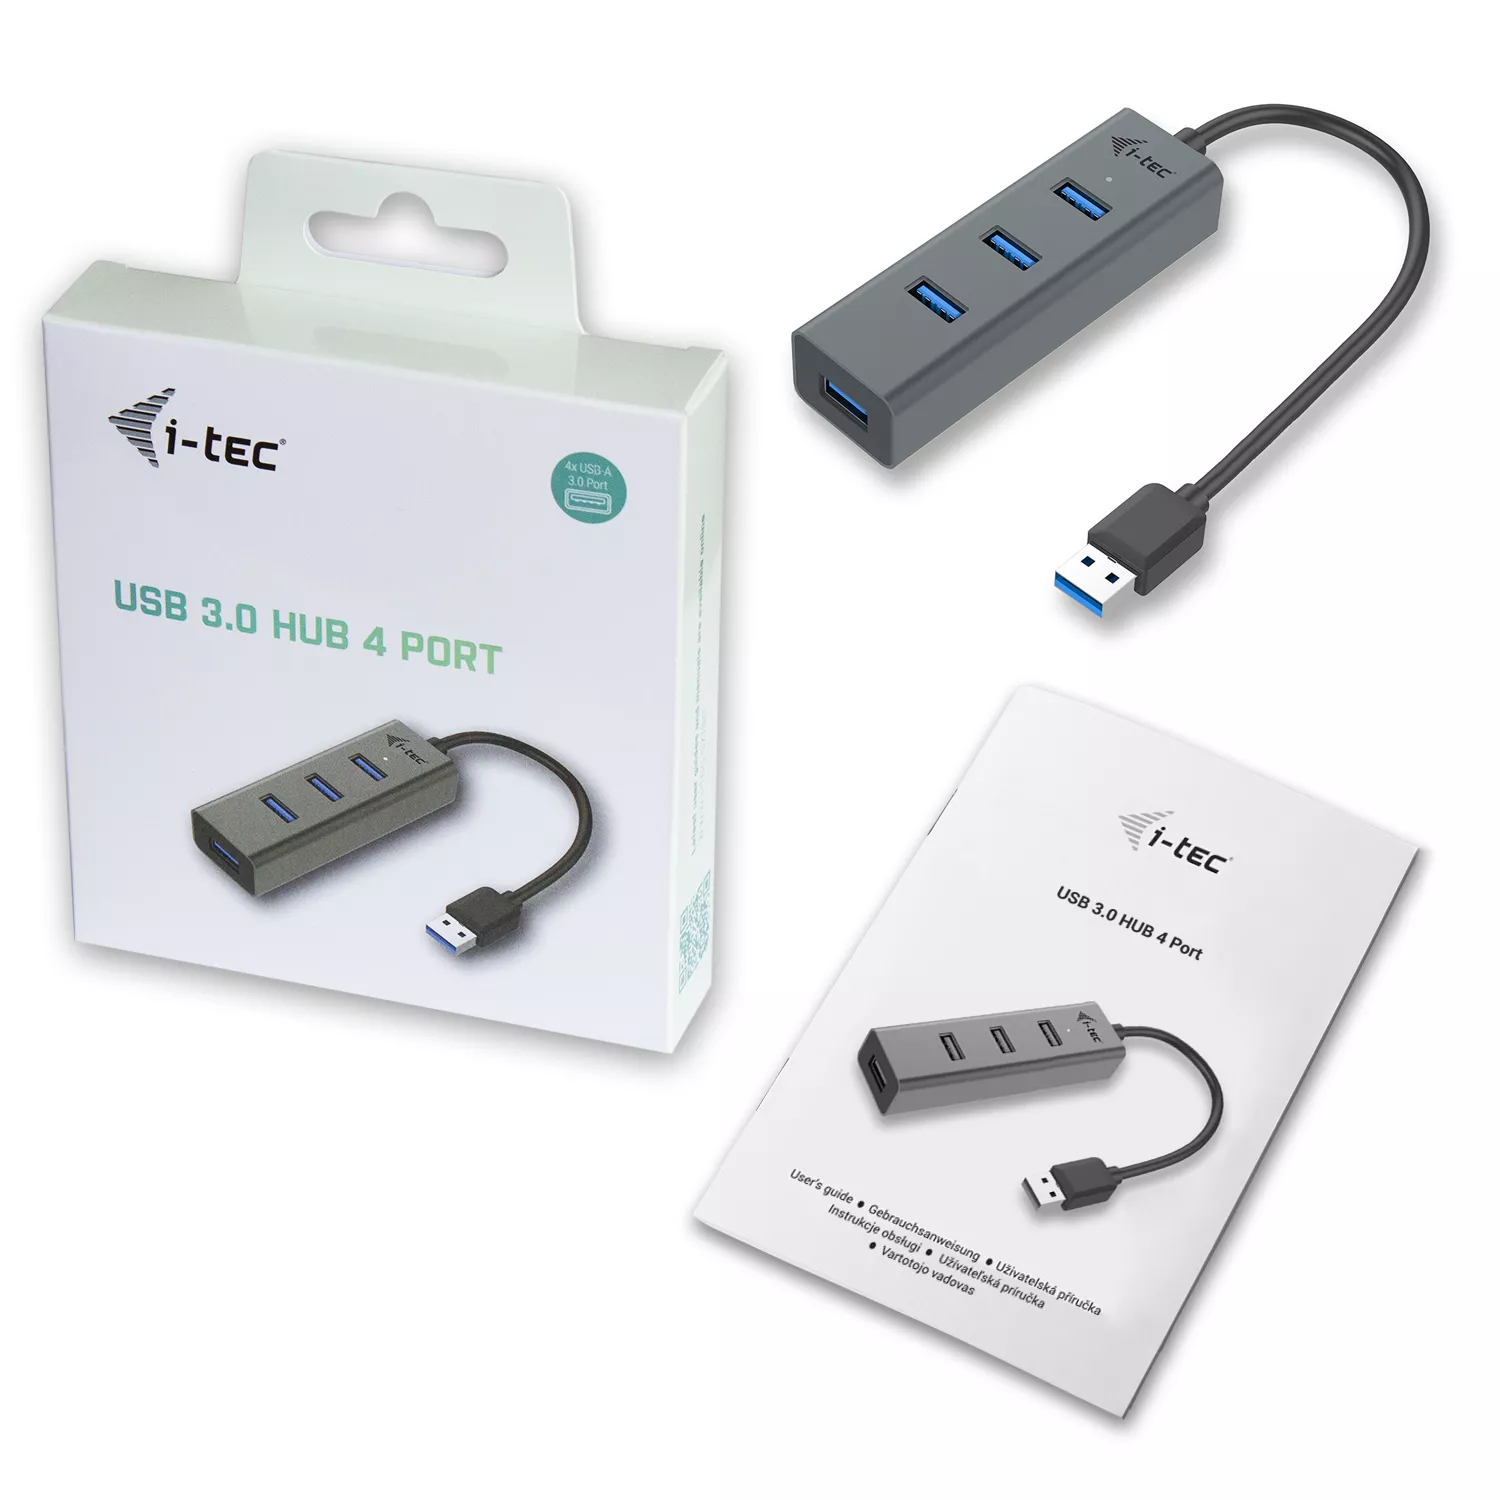 Vente I-TEC USB 3.0 Metal HUB 4 port without i-tec au meilleur prix - visuel 4